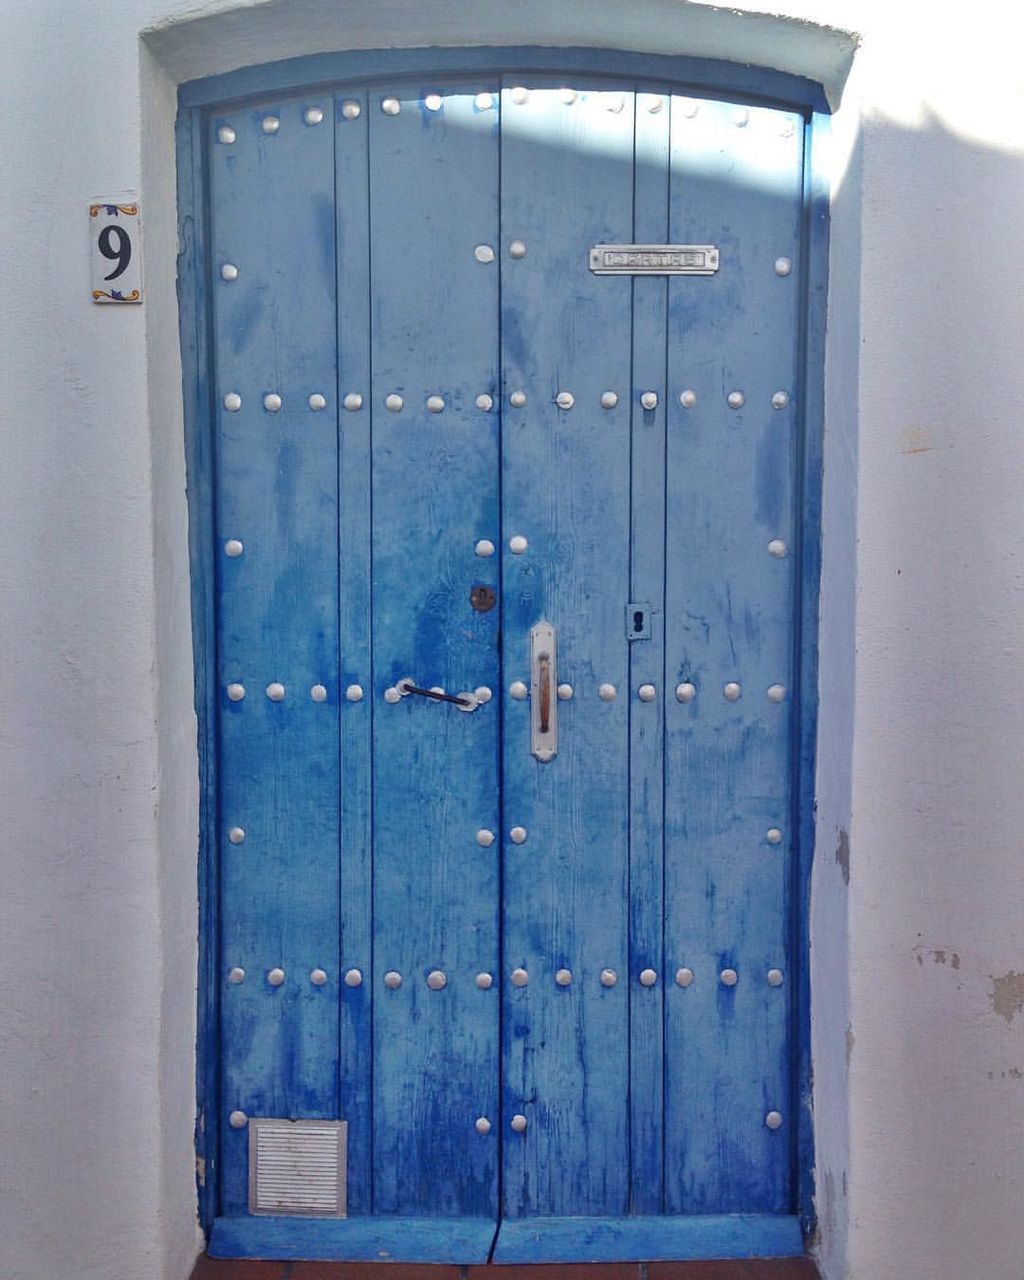 CLOSE-UP OF CLOSED DOOR OF BLUE METAL